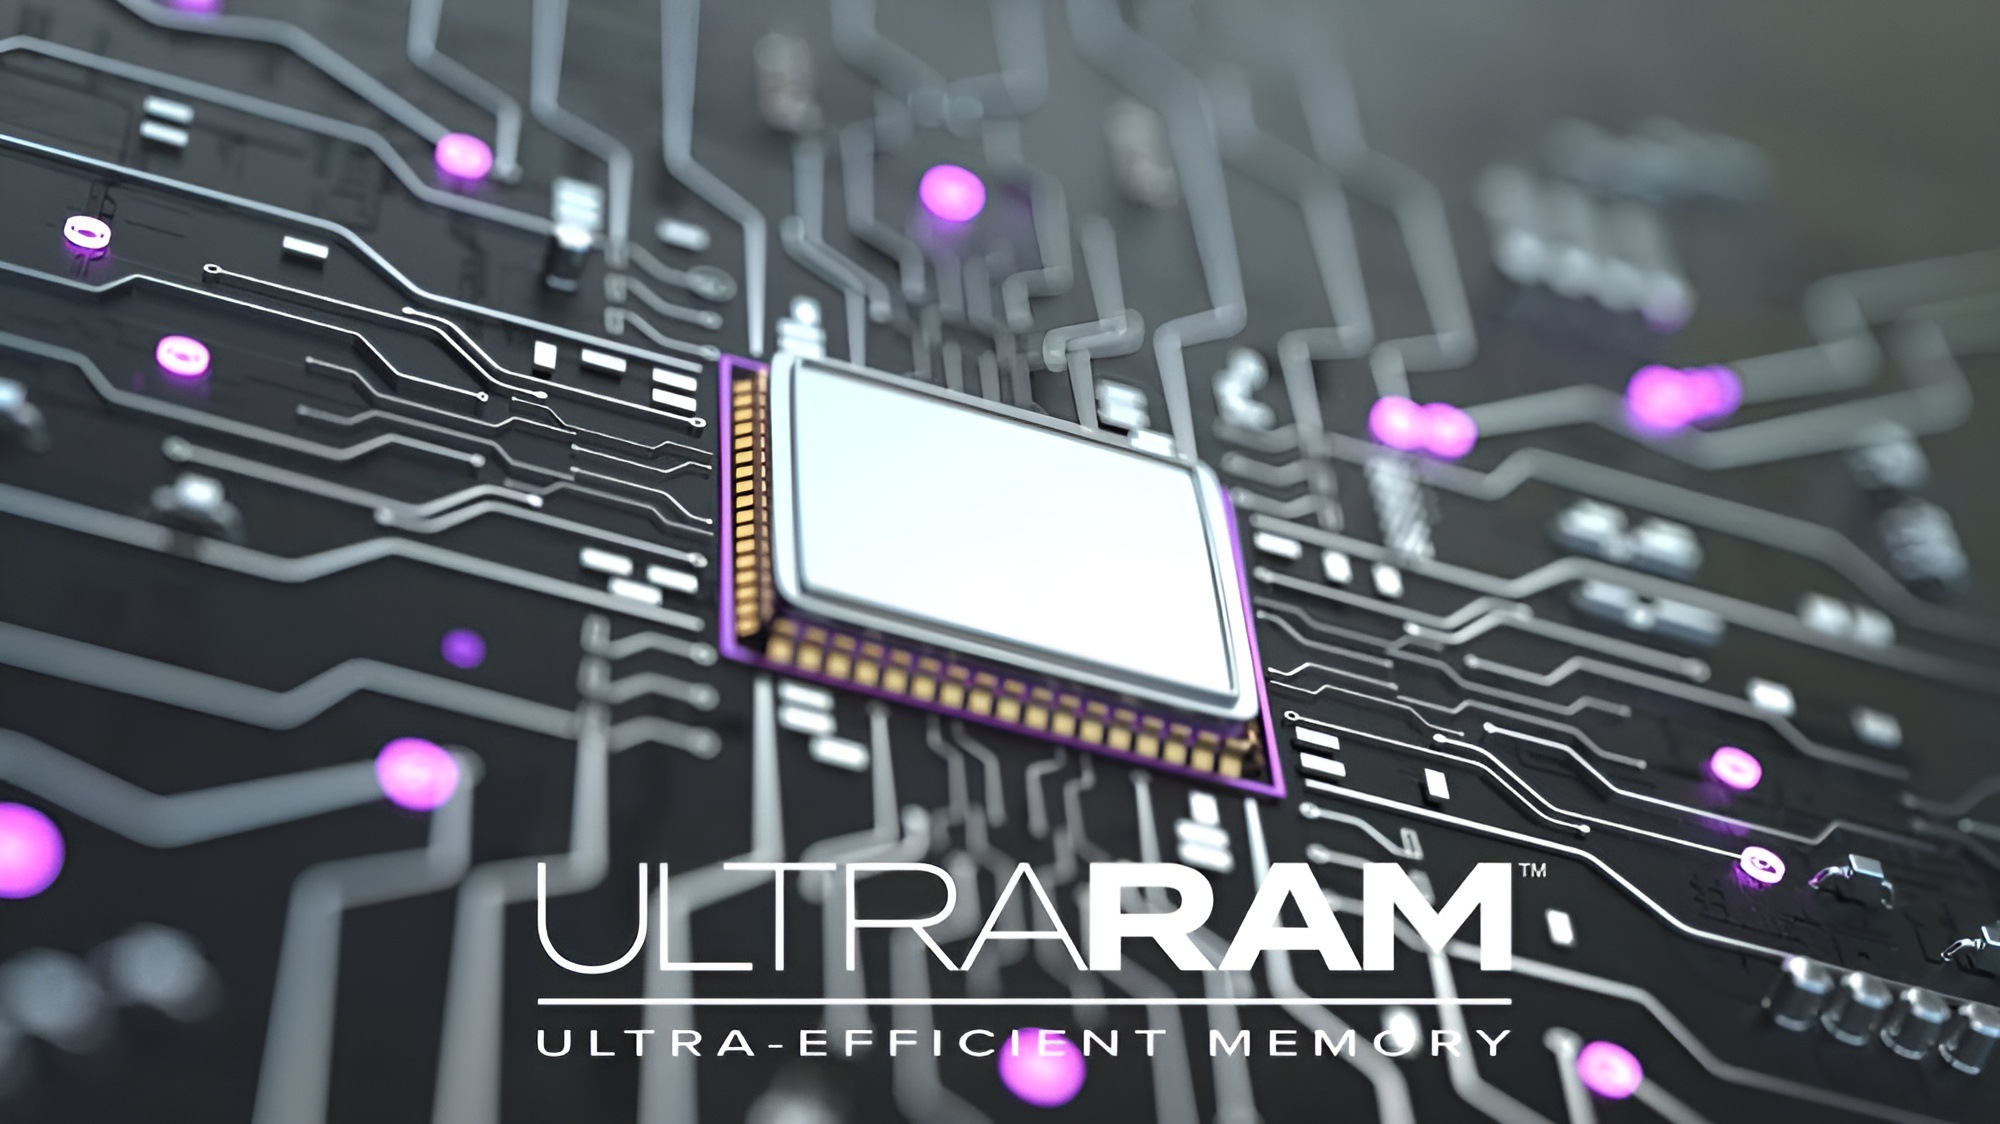 “UltraRAM” Quinas Technology 10 میلیون چرخه بازنویسی و 1000 سال حفظ داده را ارائه می دهد، فناوری 1.1 میلیون پوند بودجه دریافت می کند